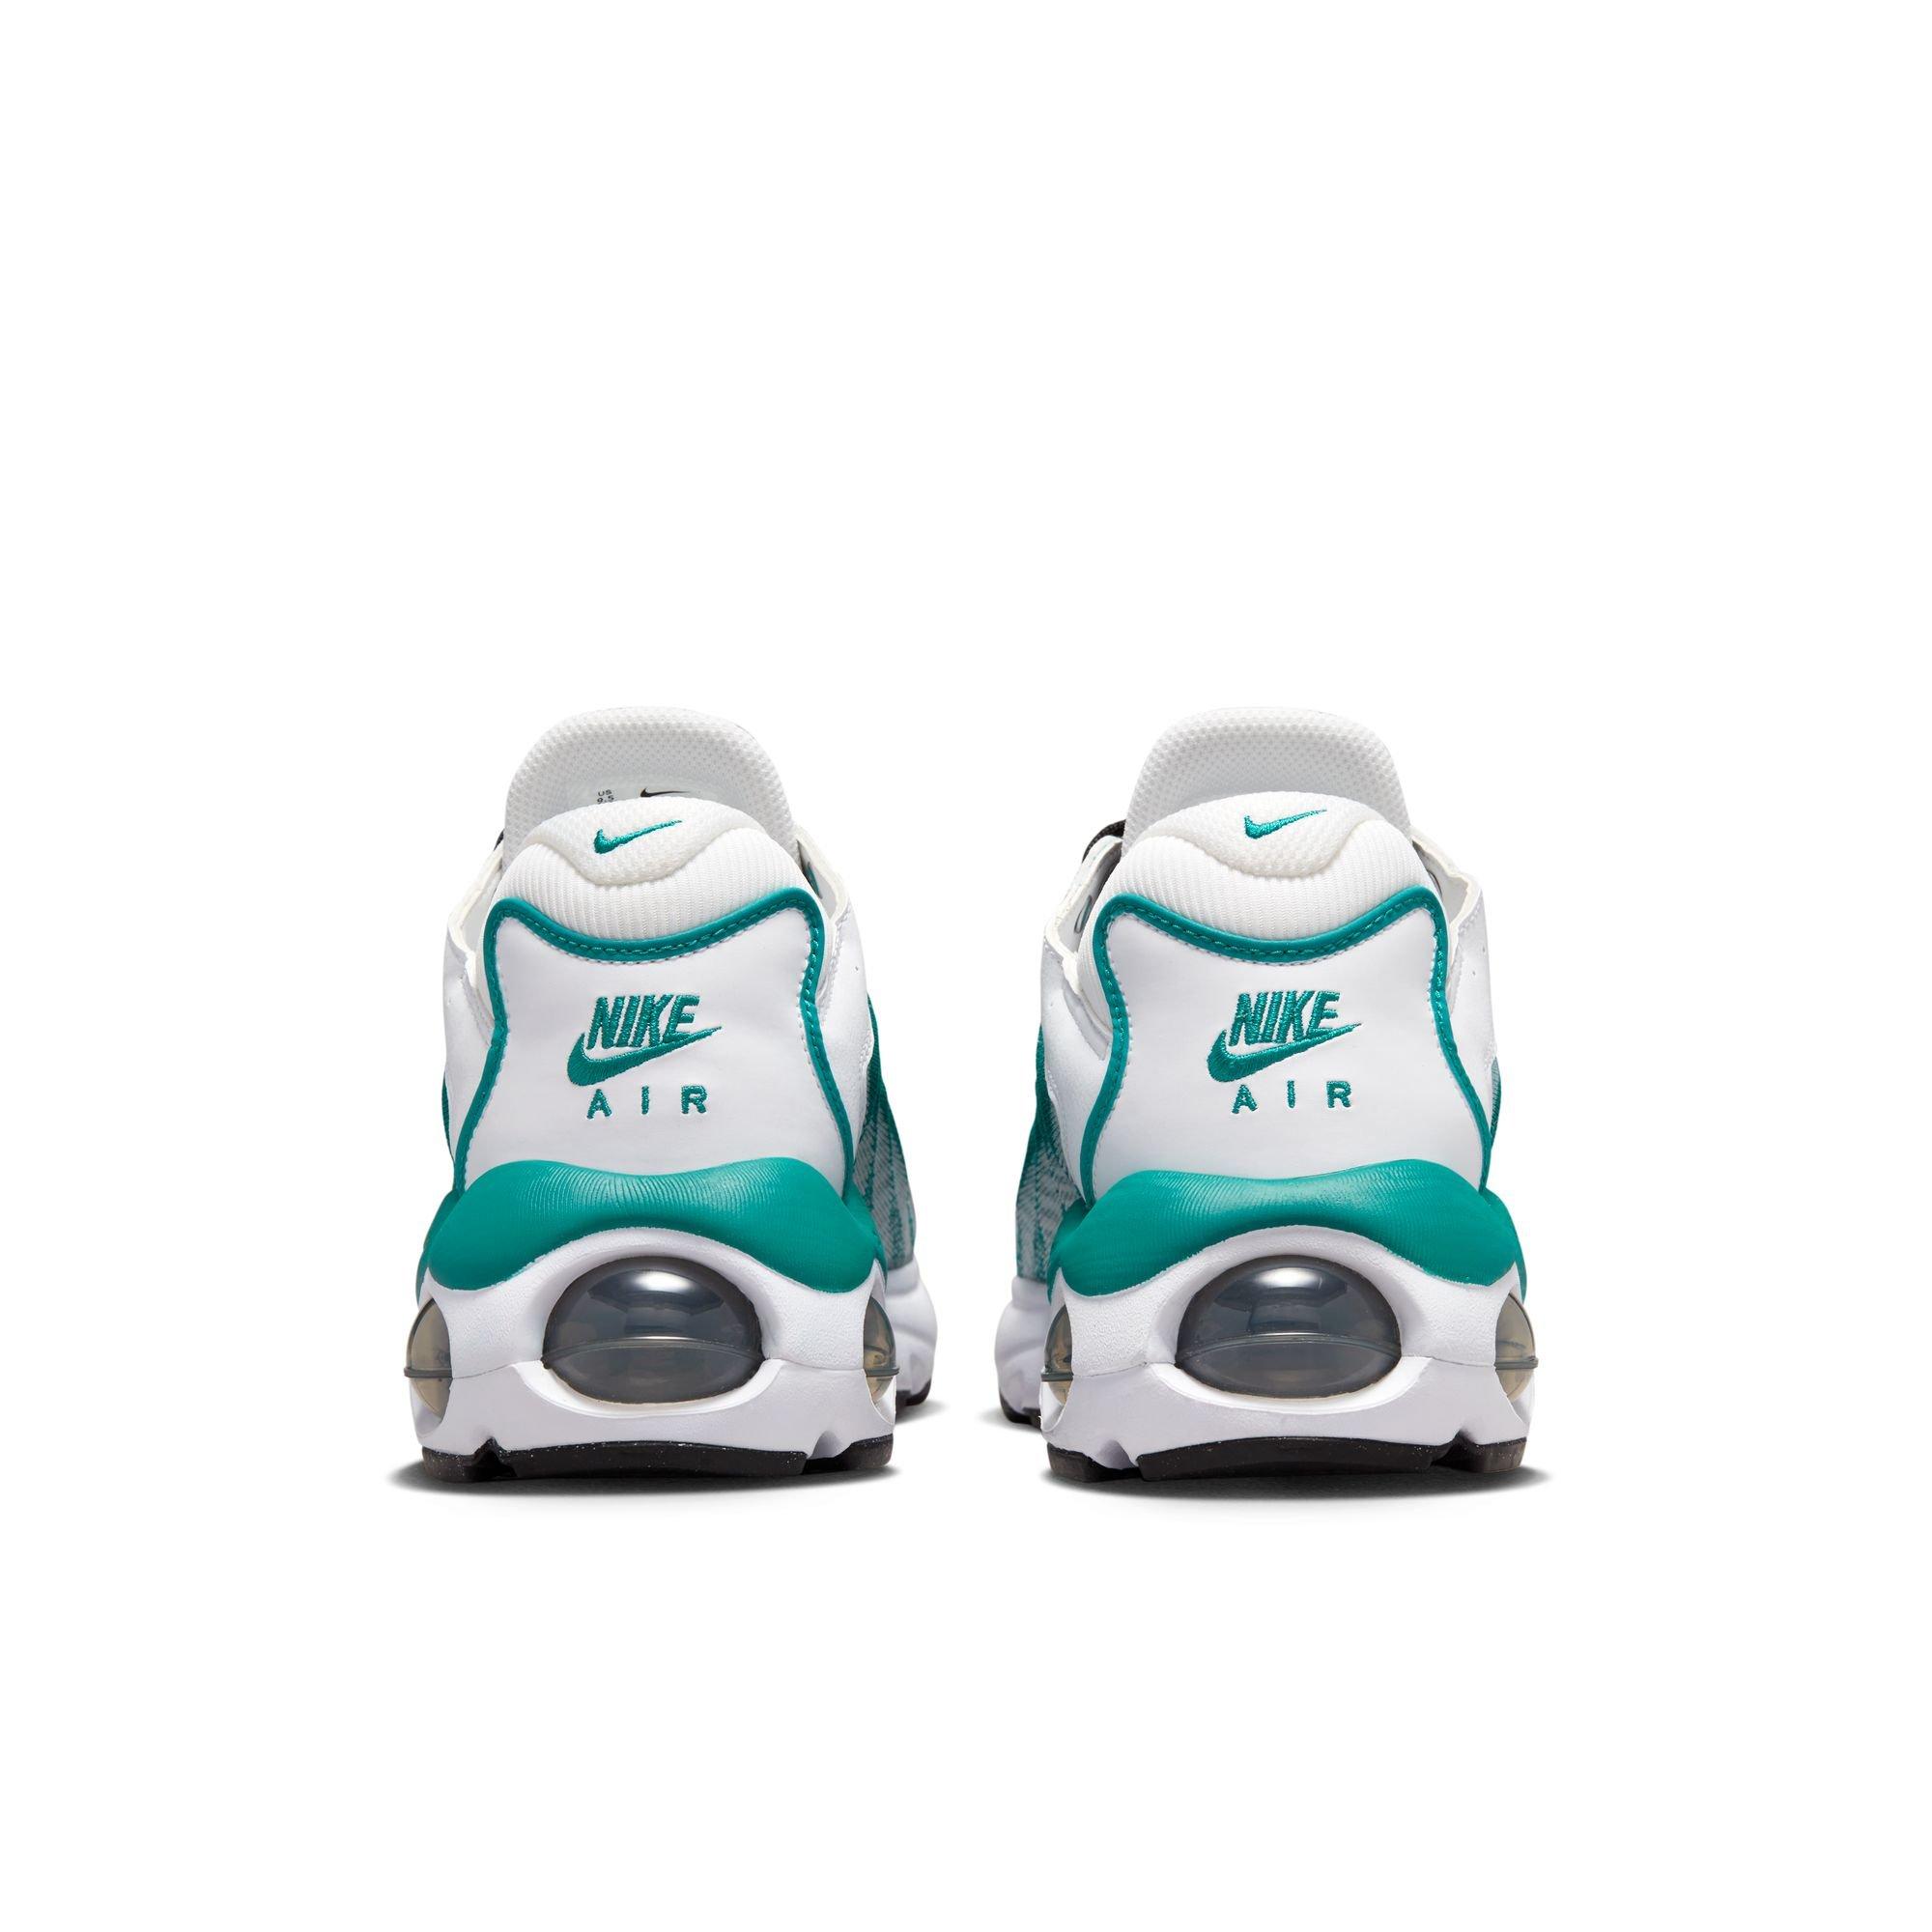 zuiden Trots Verplicht Nike Air Max TW "Sundial Connect" Men's Shoe